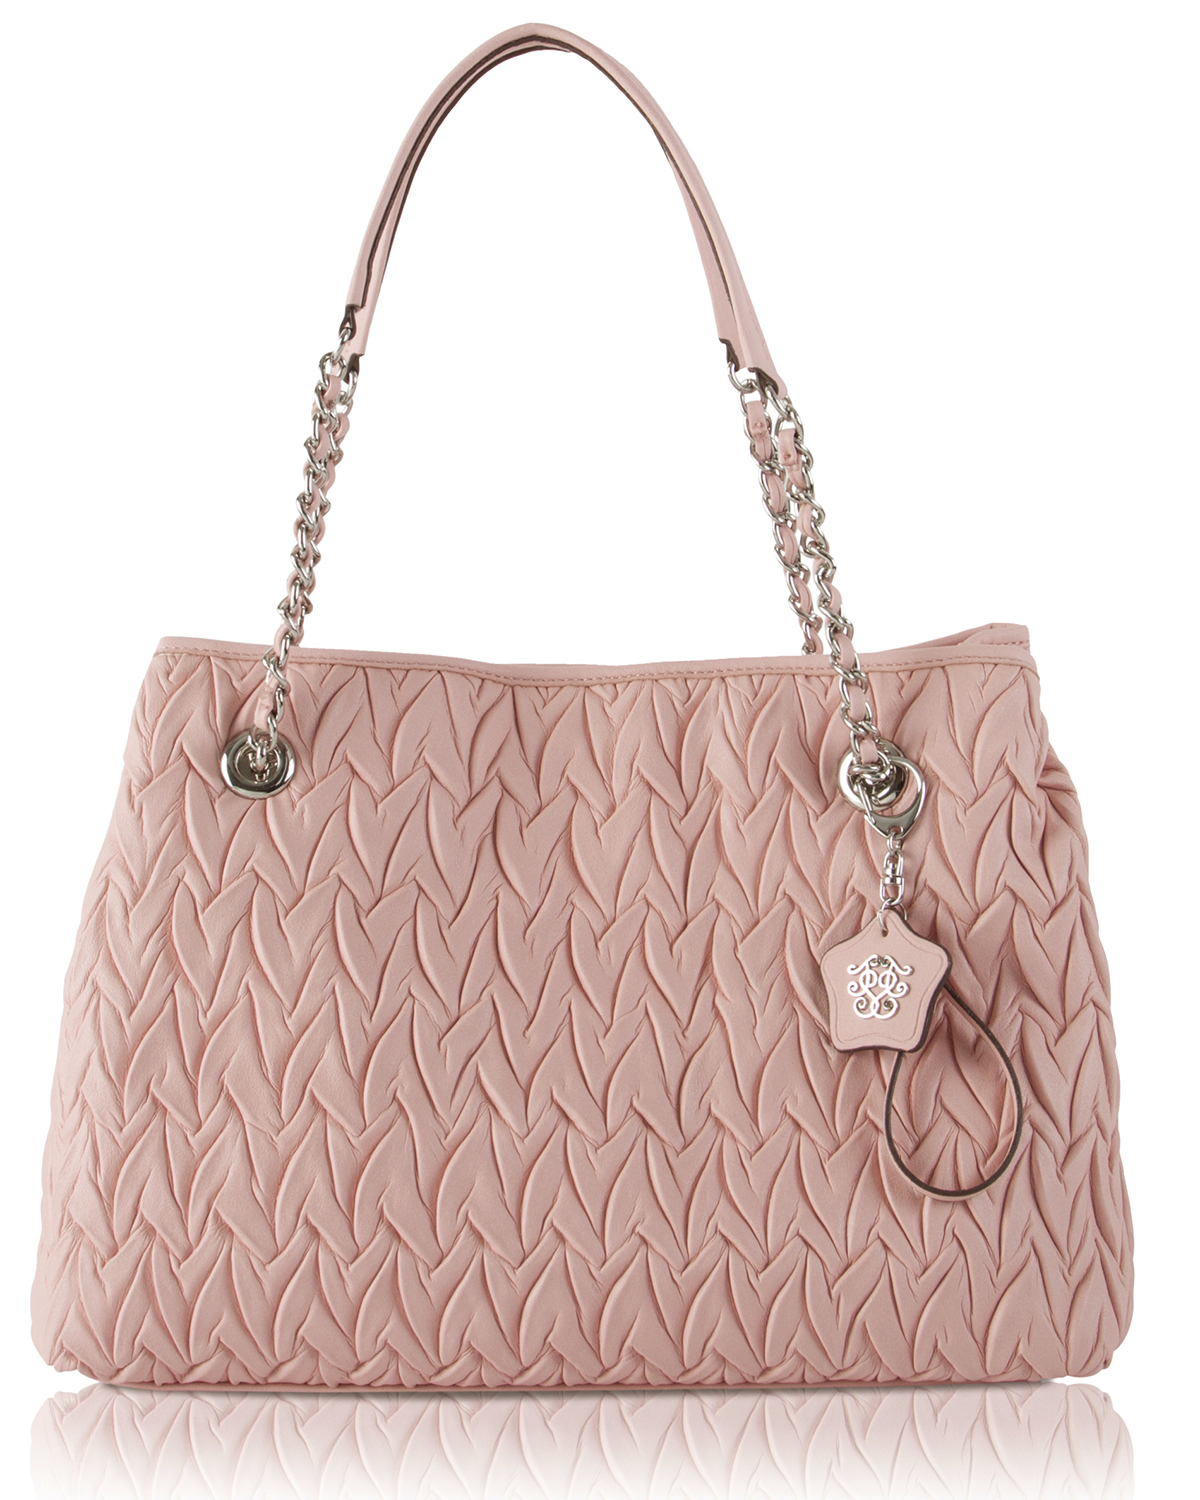 Jessica Simpson Cecelia Tote Handbag - Peony Pink | eBay